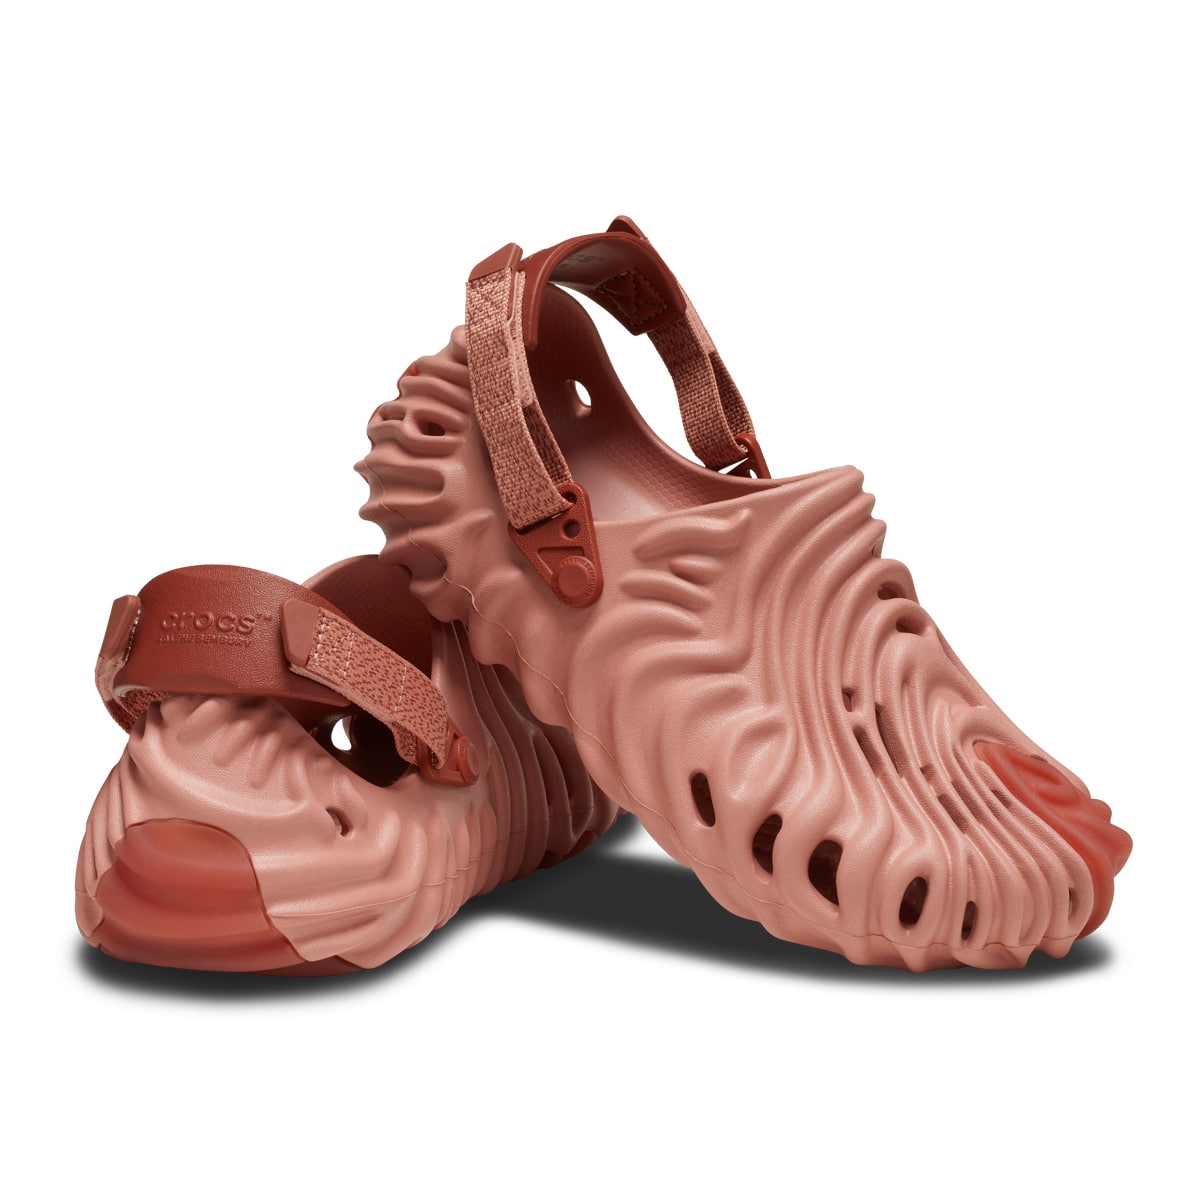 Salehe Bembury Crocs The Pollex Clog 1CN靴/シューズ